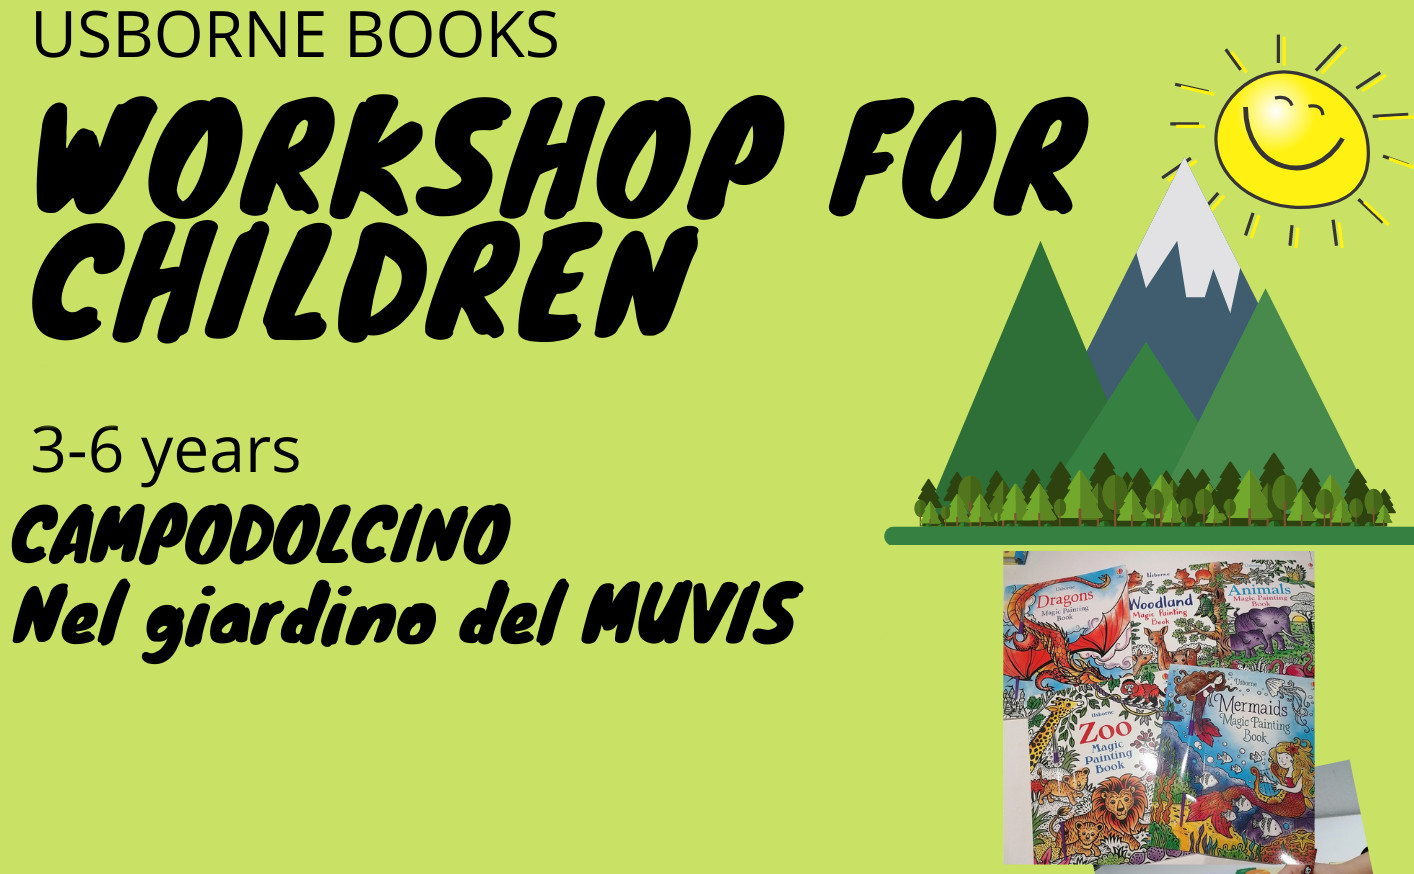 Workshop for children